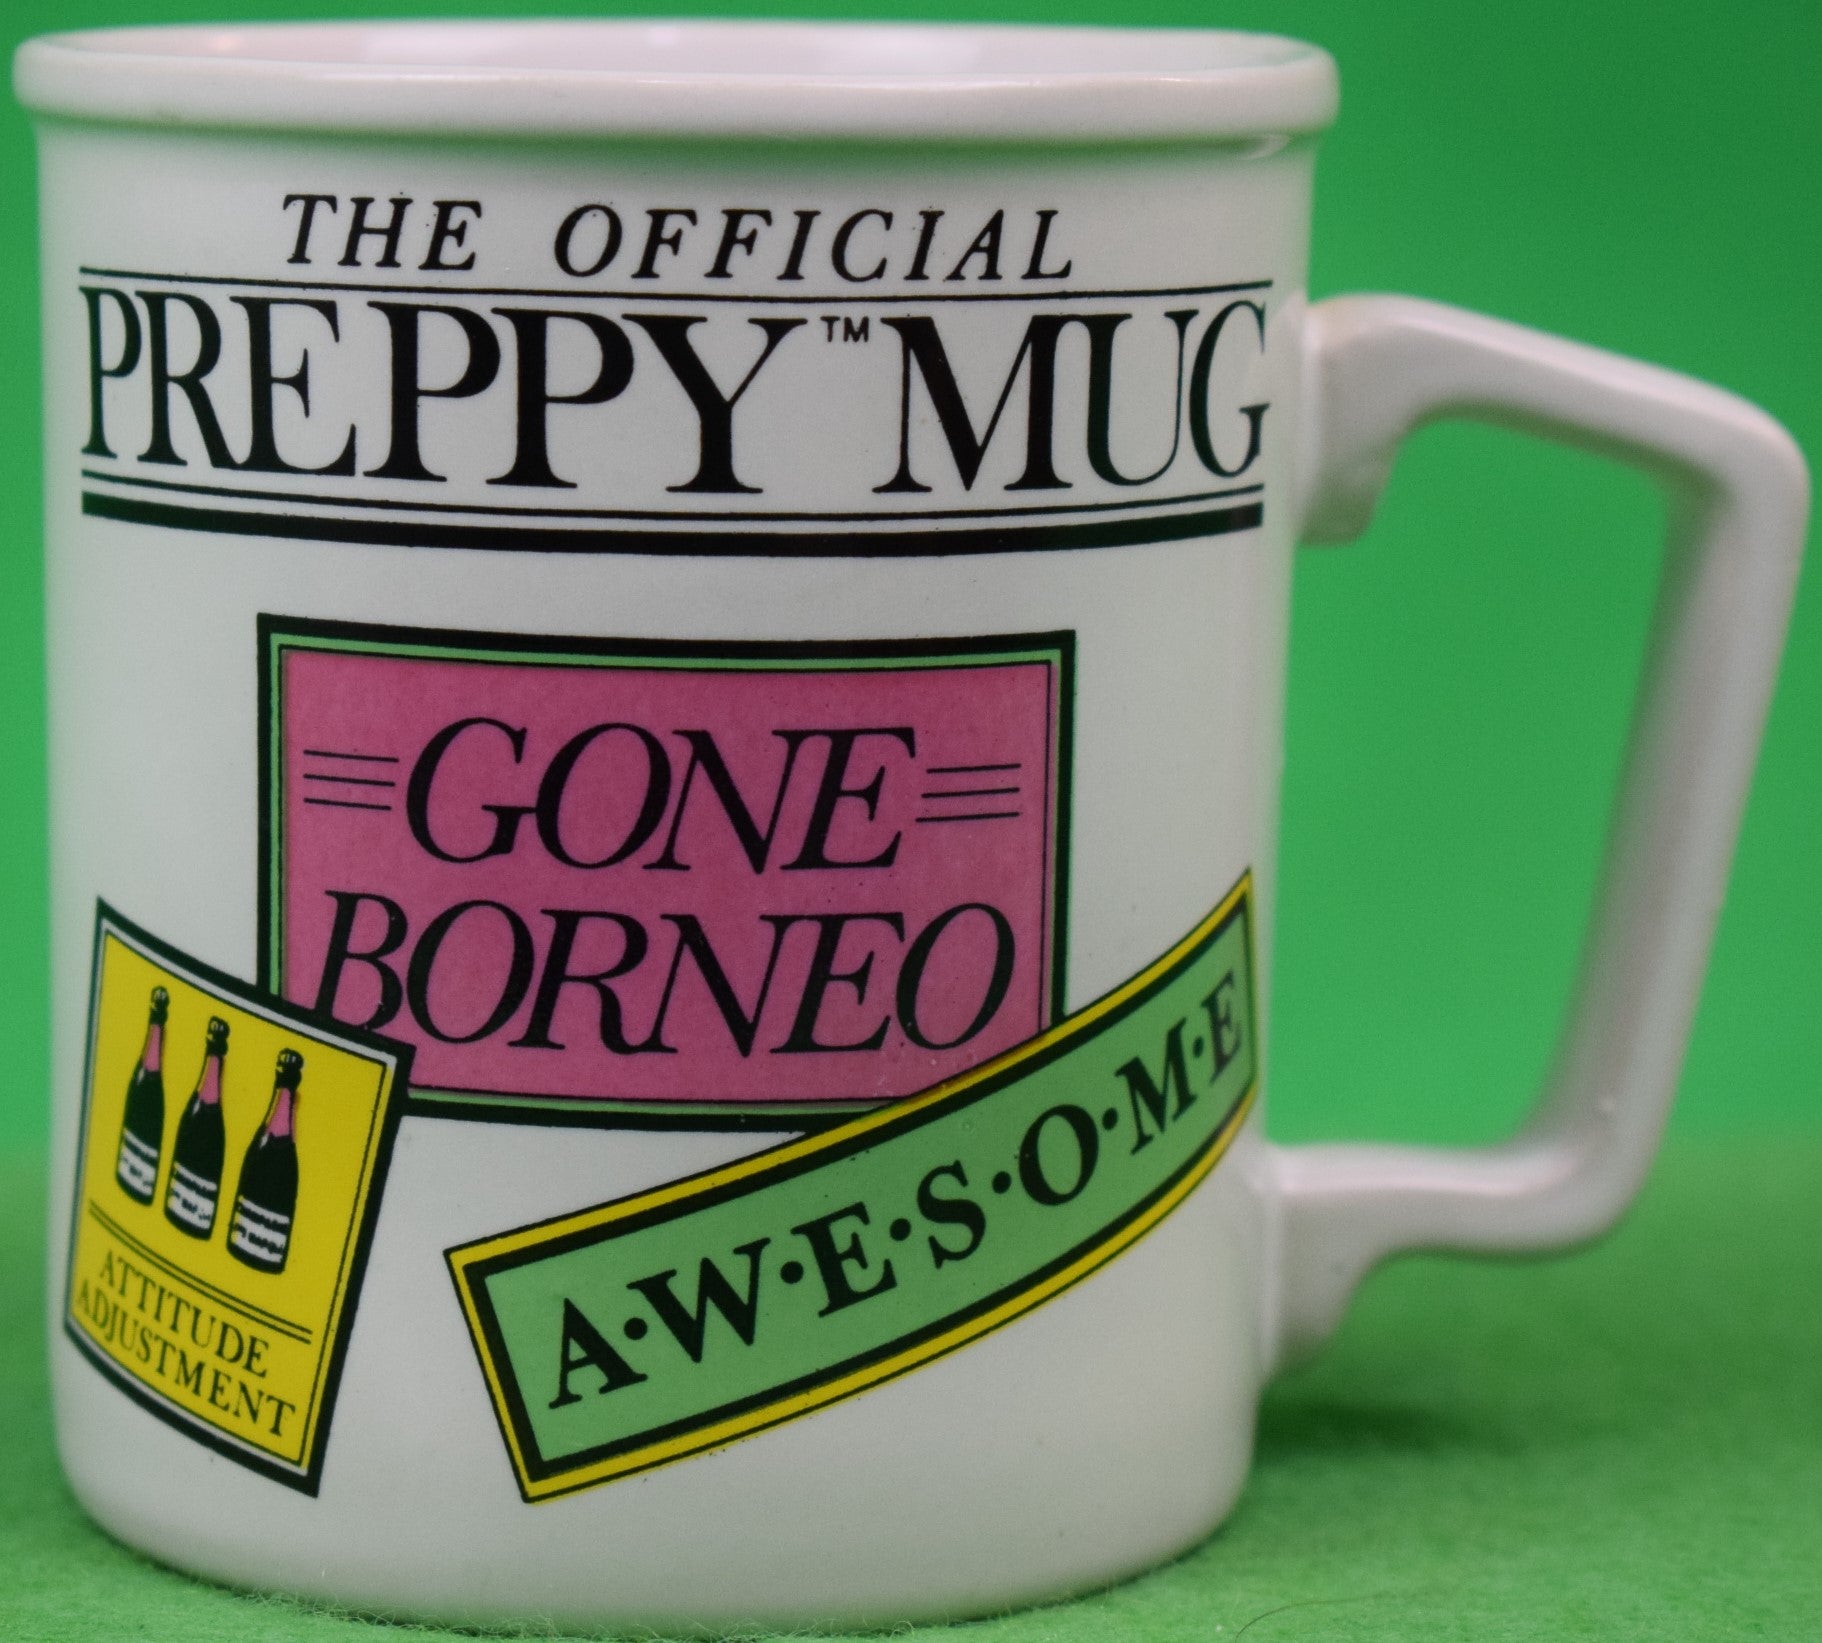 The Official Preppy Gone Borneo/ Awesome/ Attitude Adjustment Mug